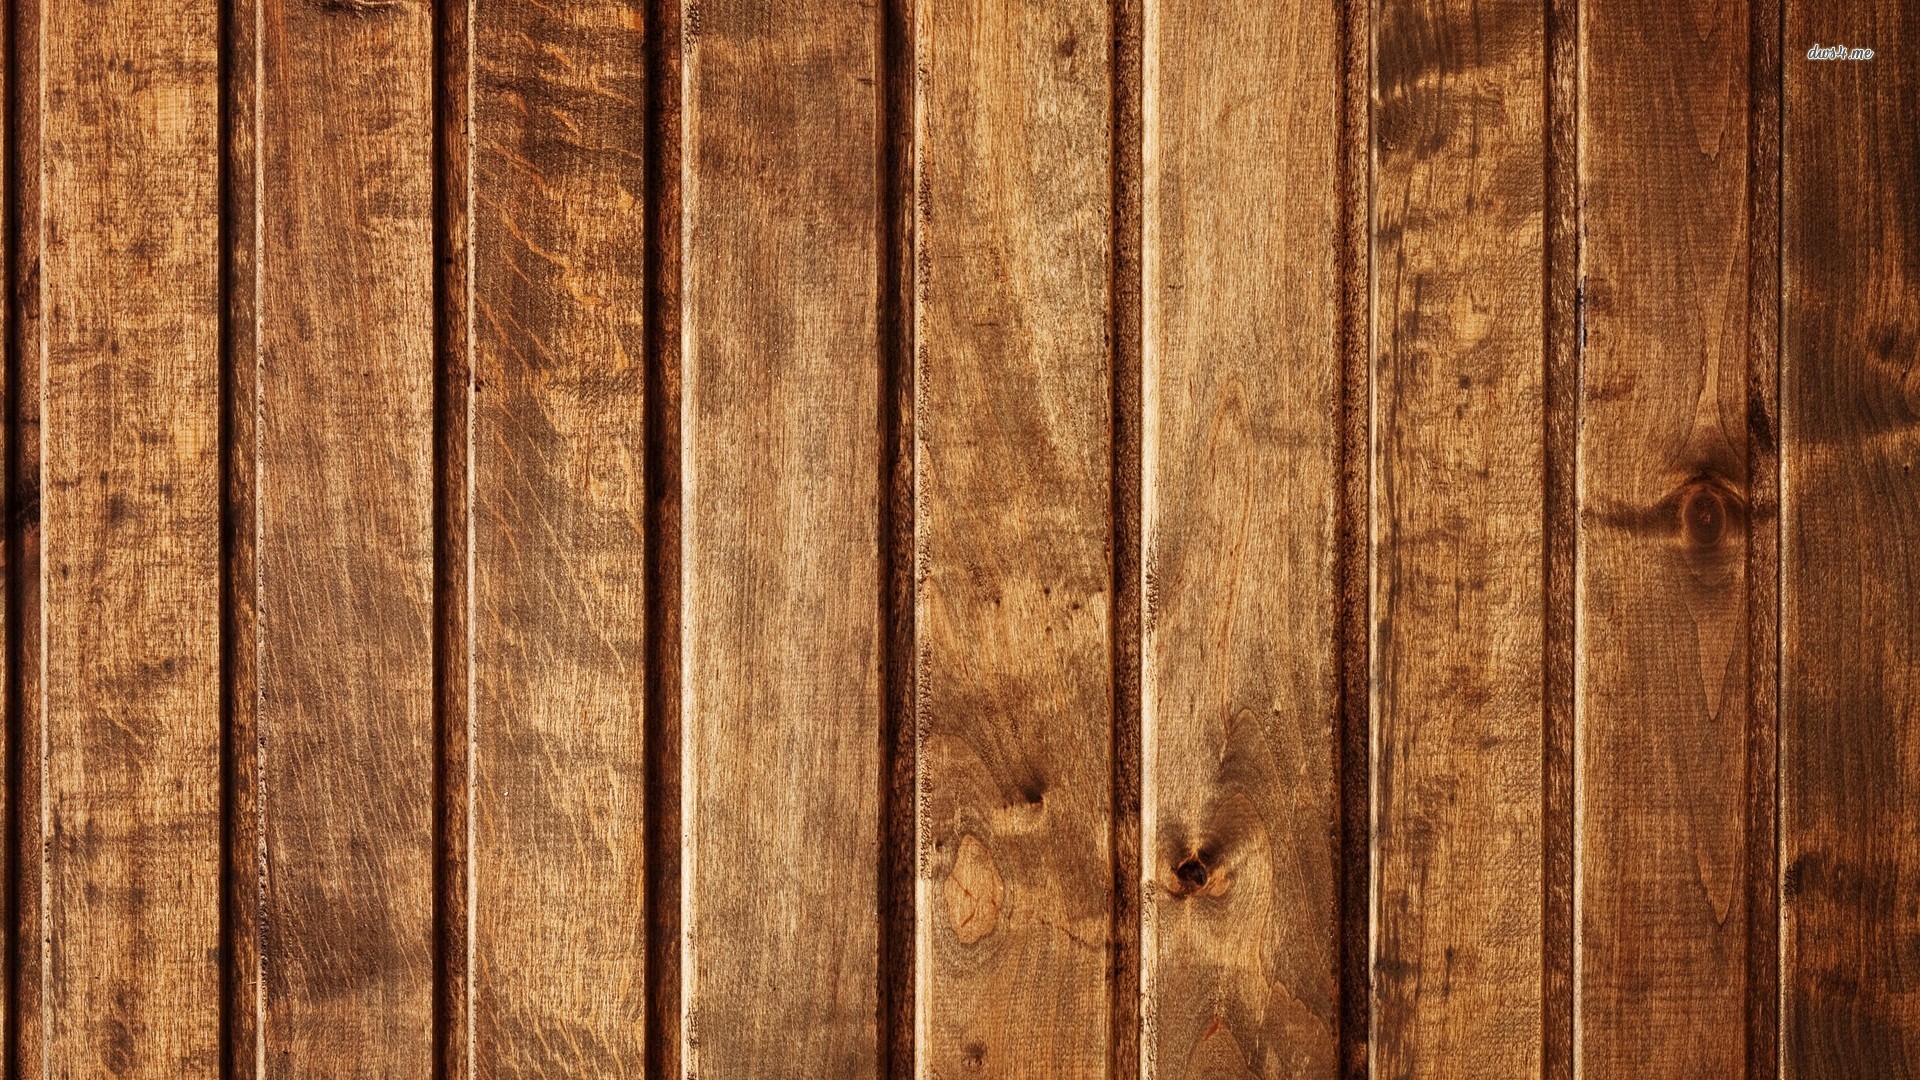 1920x1080 Wood texture wallpaper HD – wallpapermonkey.com src